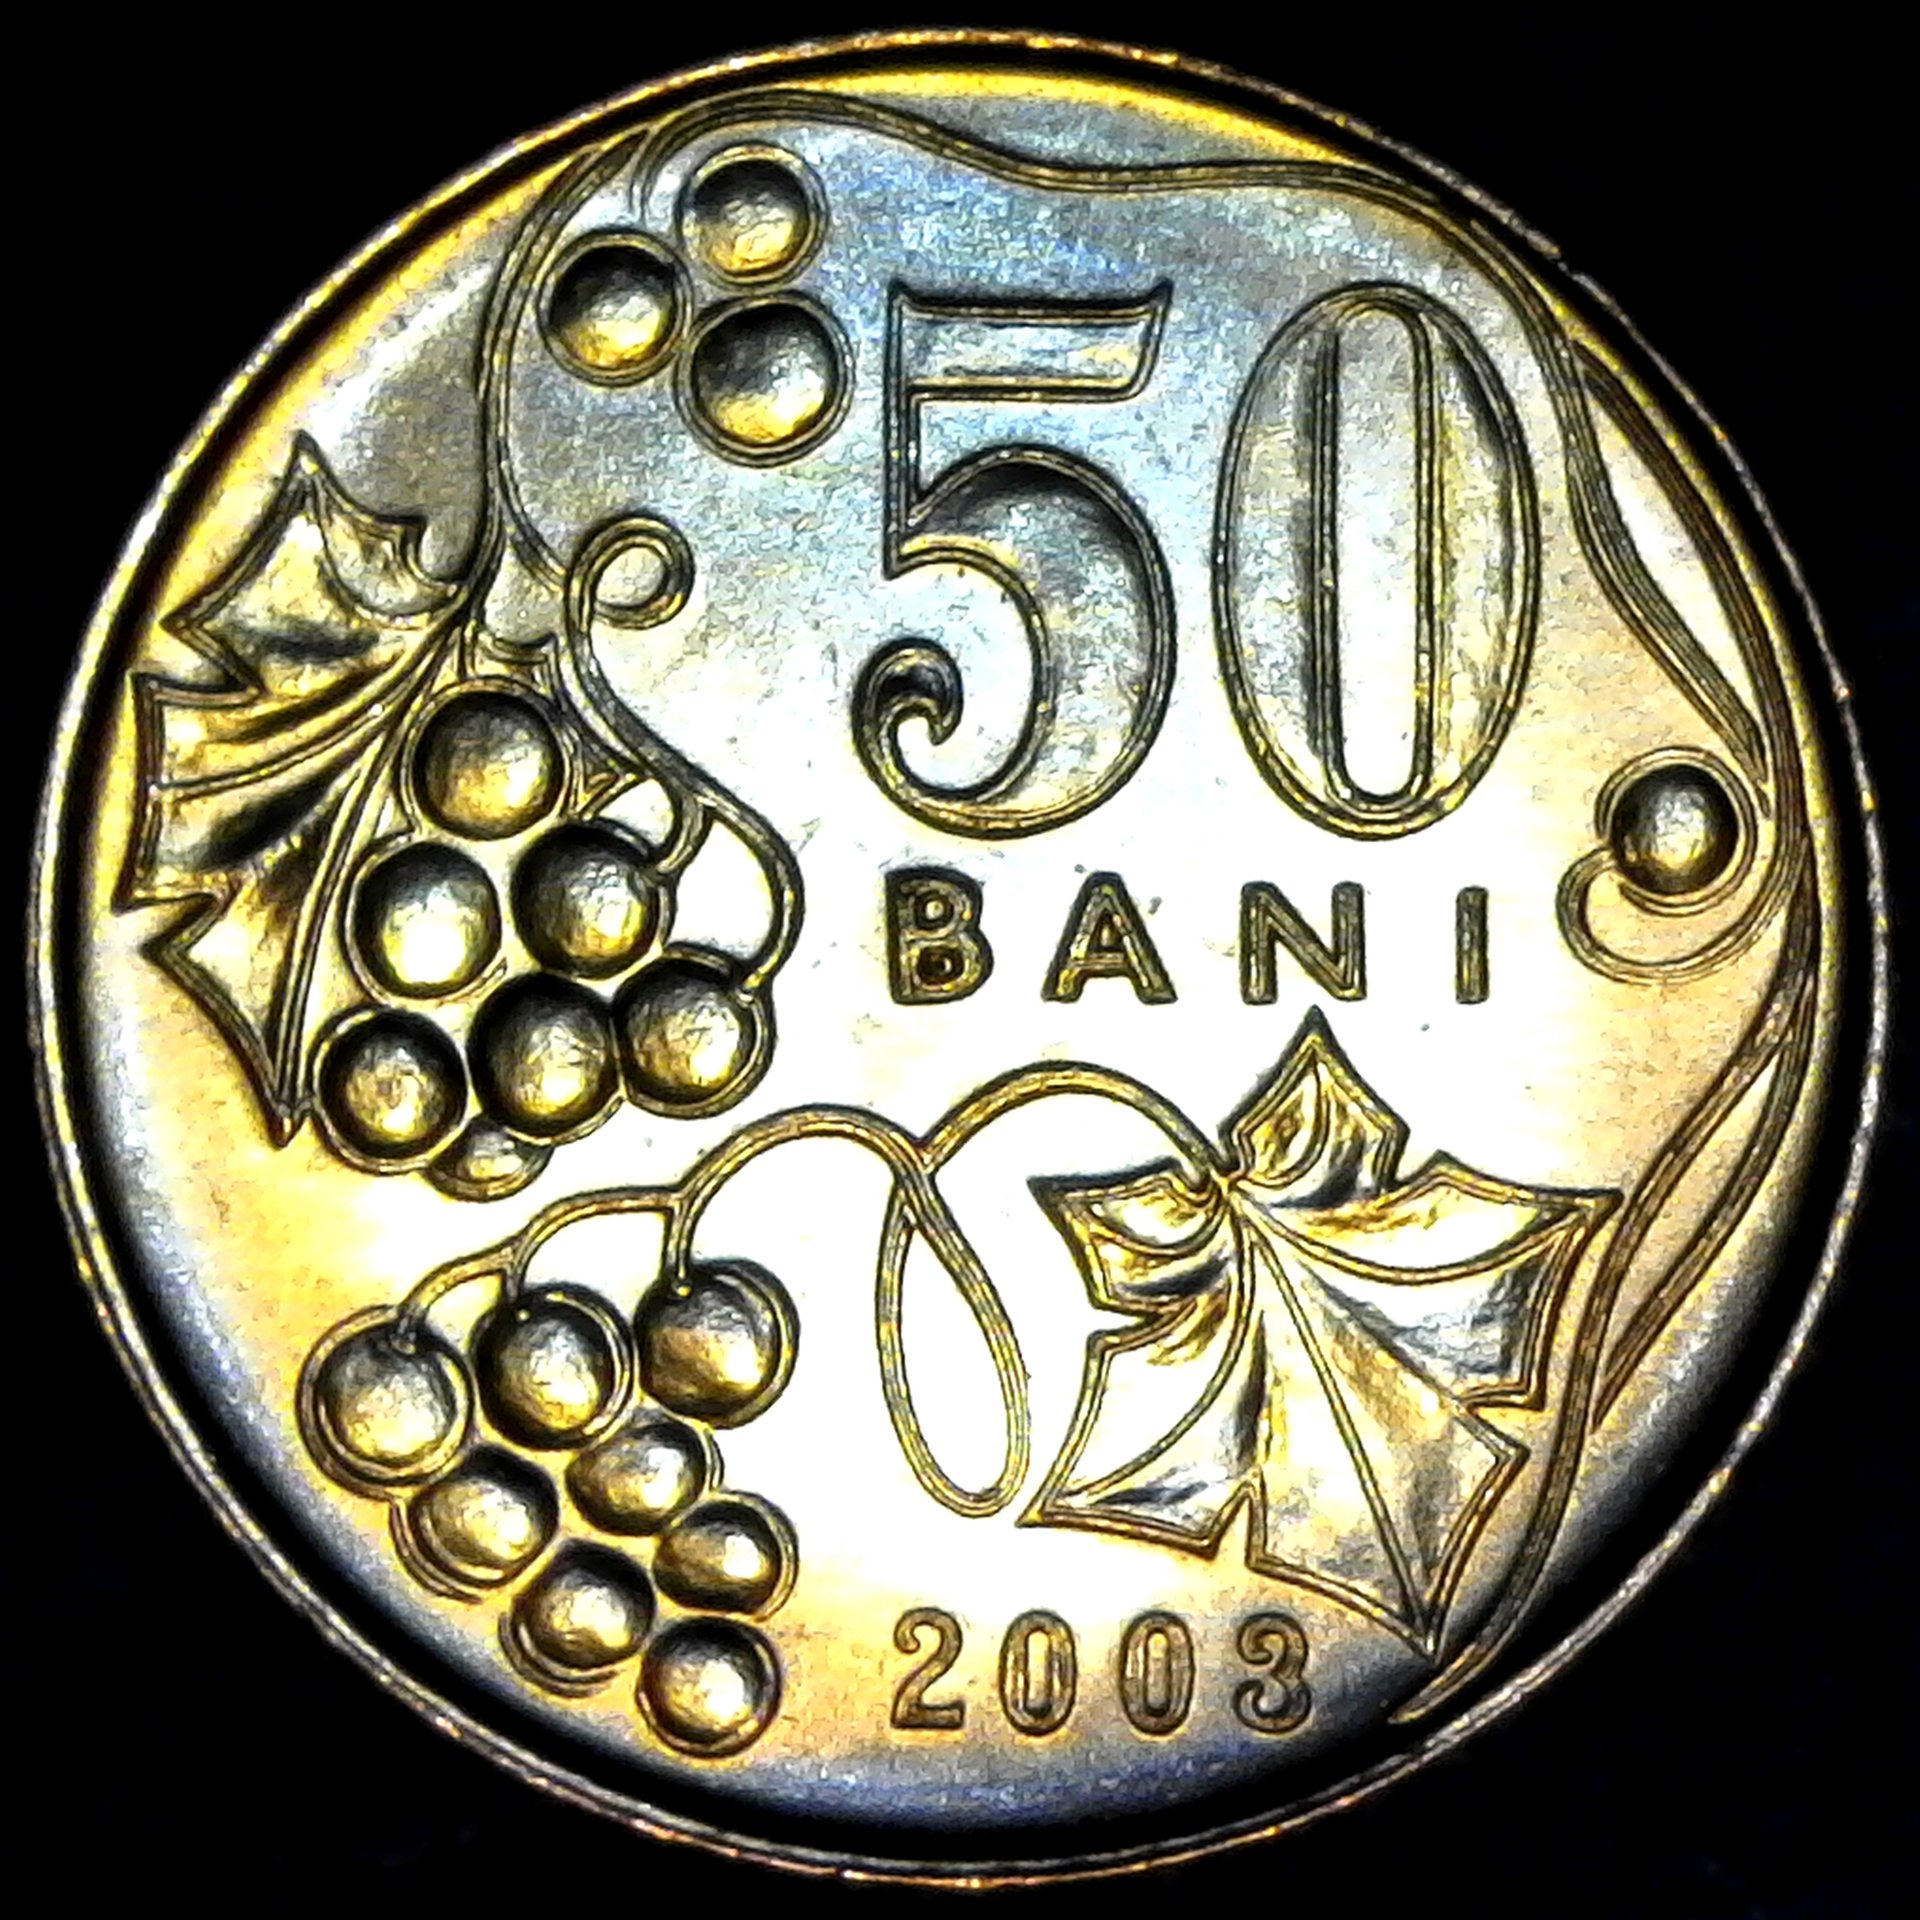 Moldova 50 Bani 2008 rev.jpg